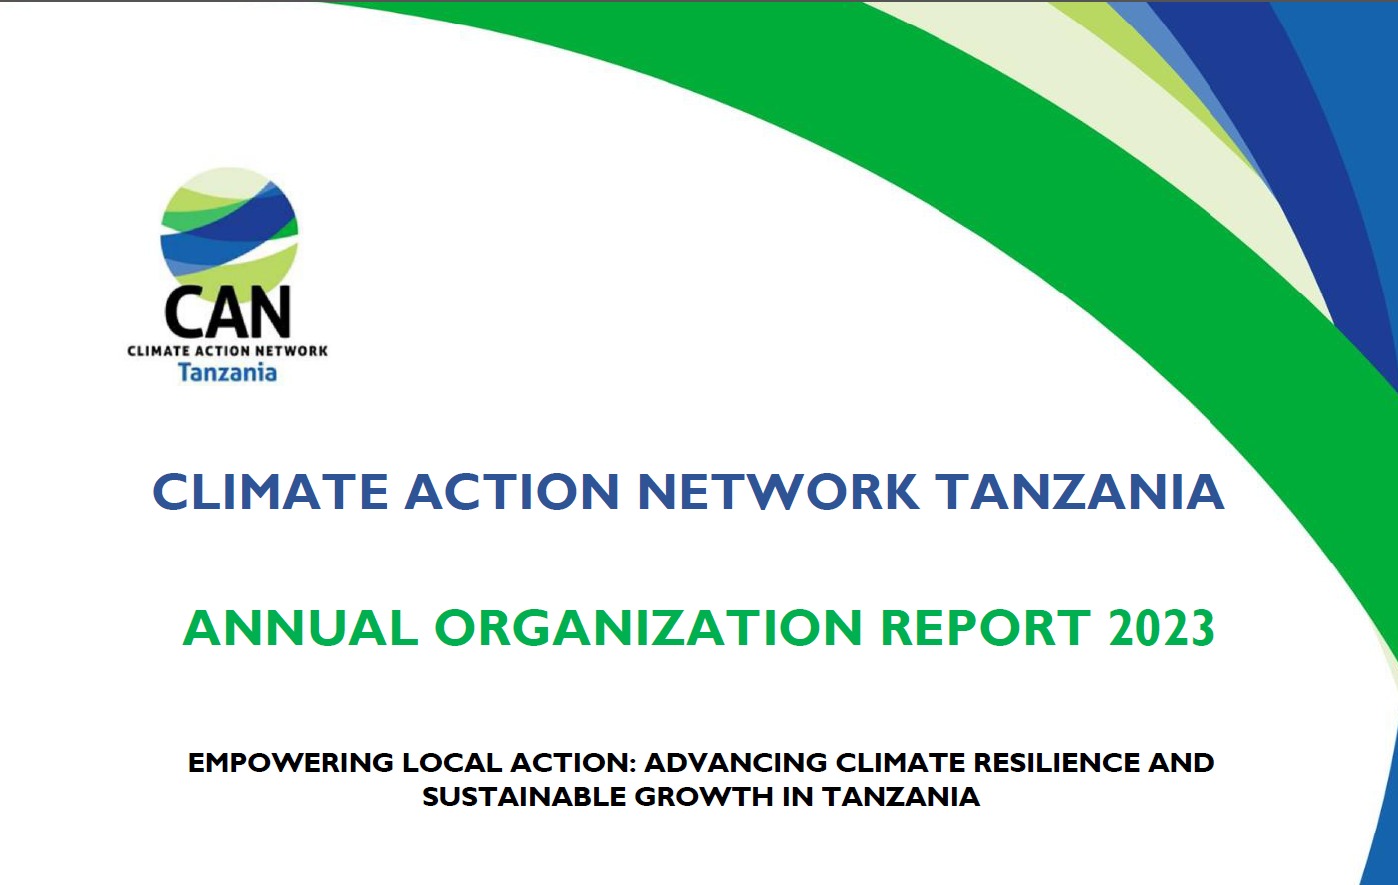 2023 Annual Organization Report